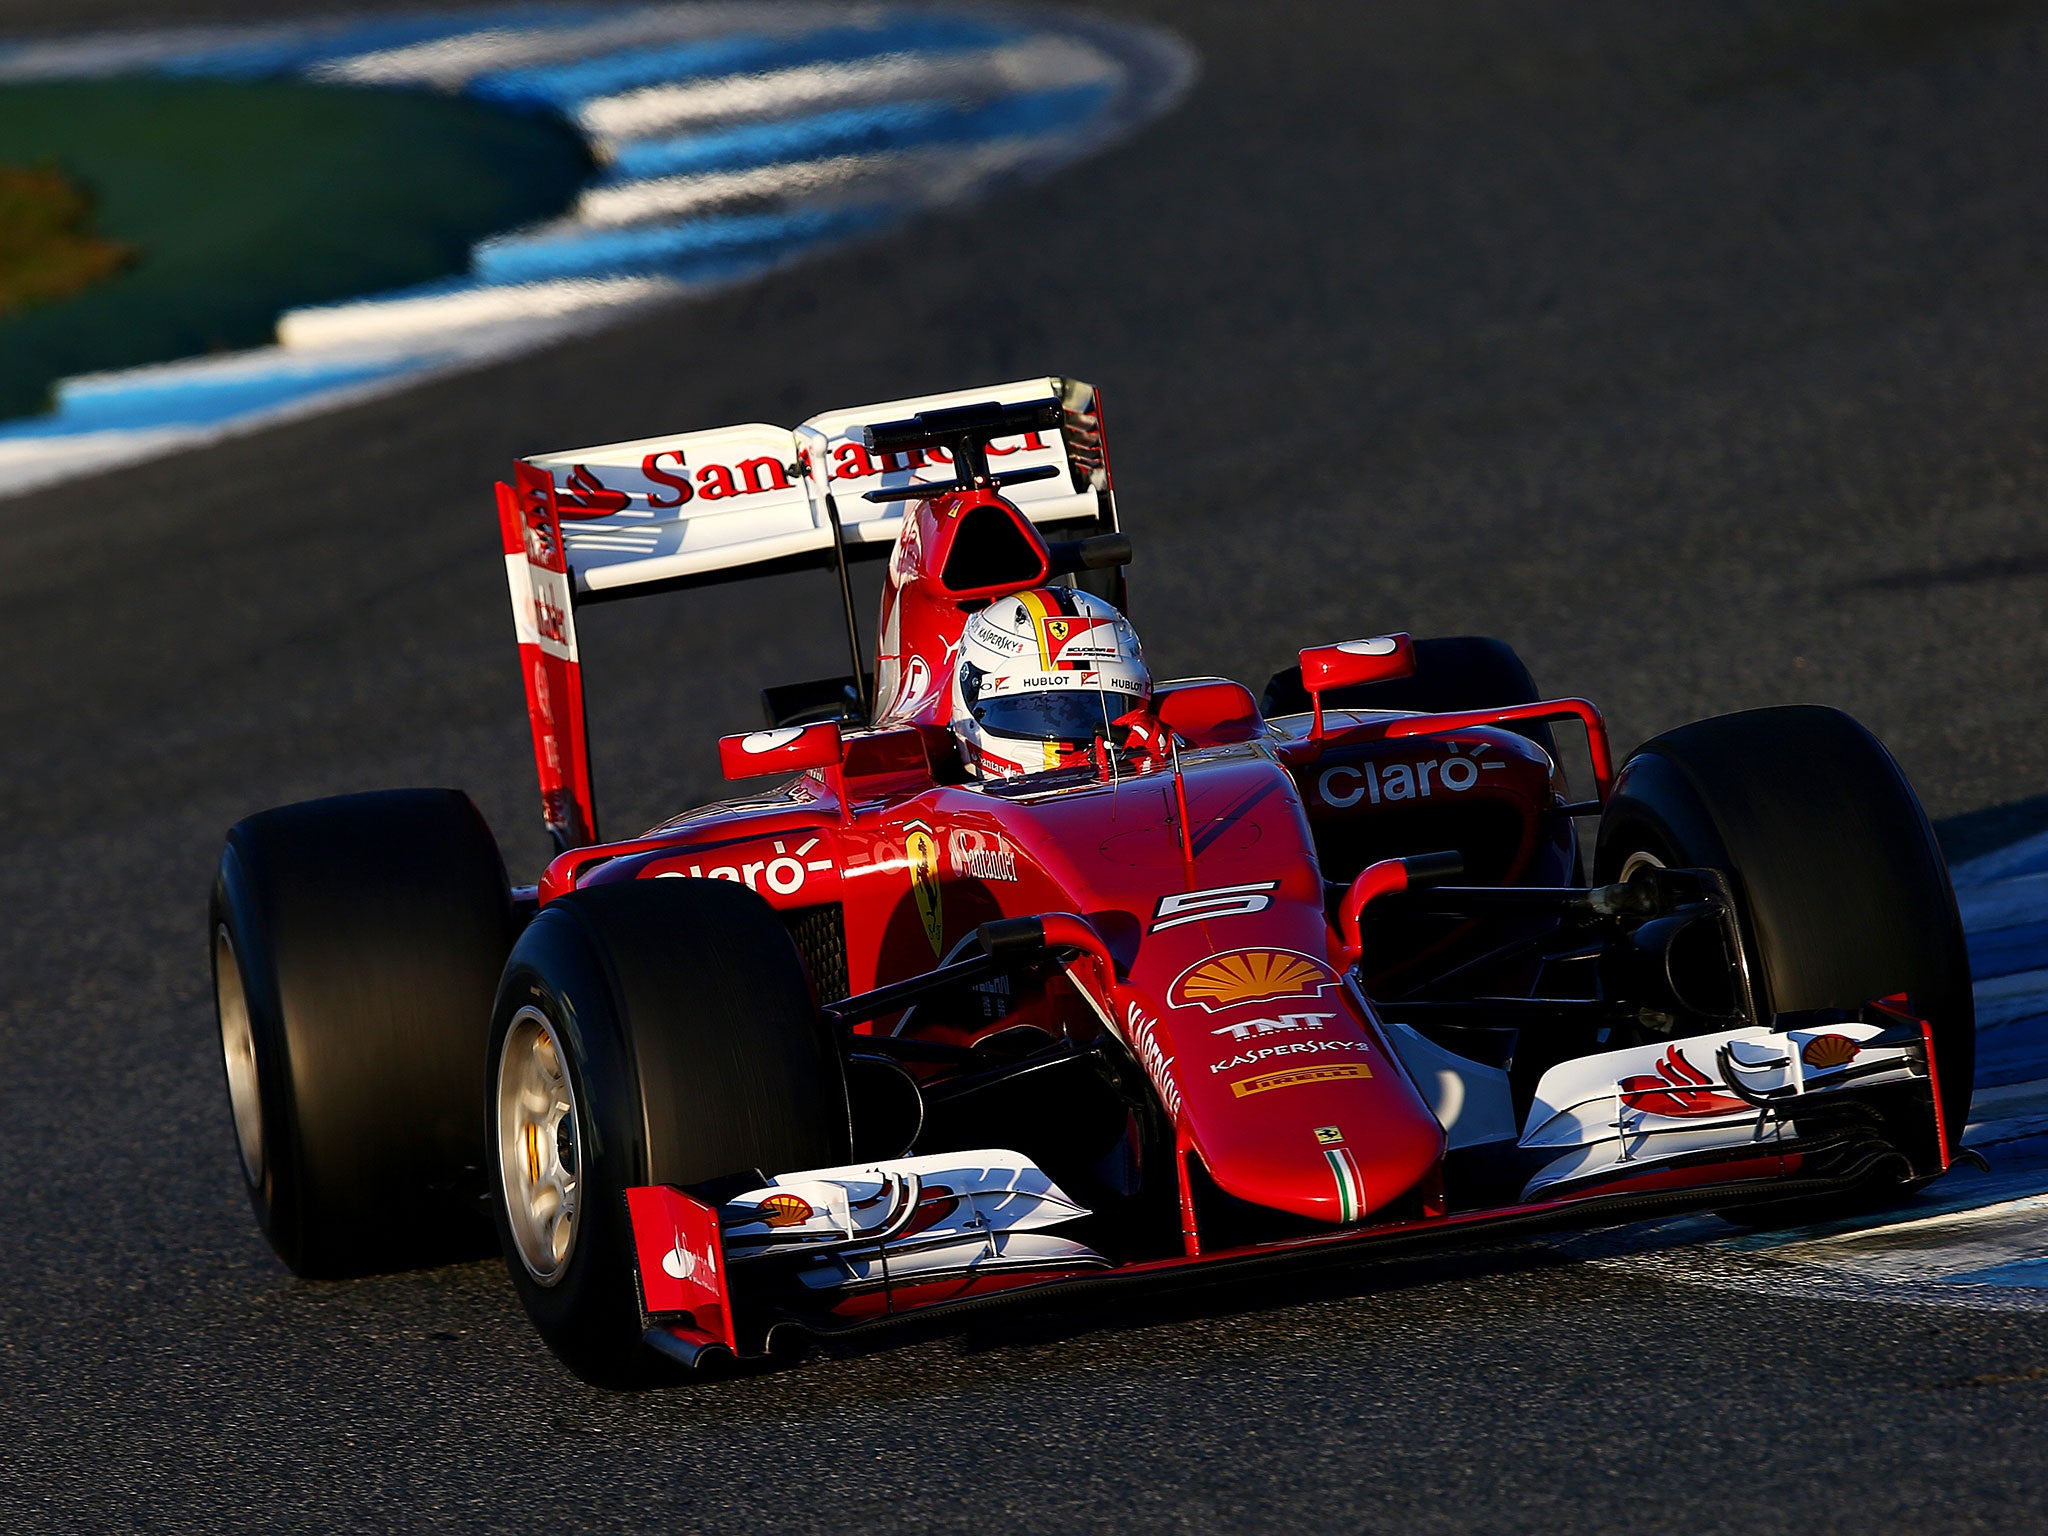 Sebastian Vettel was fastest on the first two days of pre-season testing in Jerez